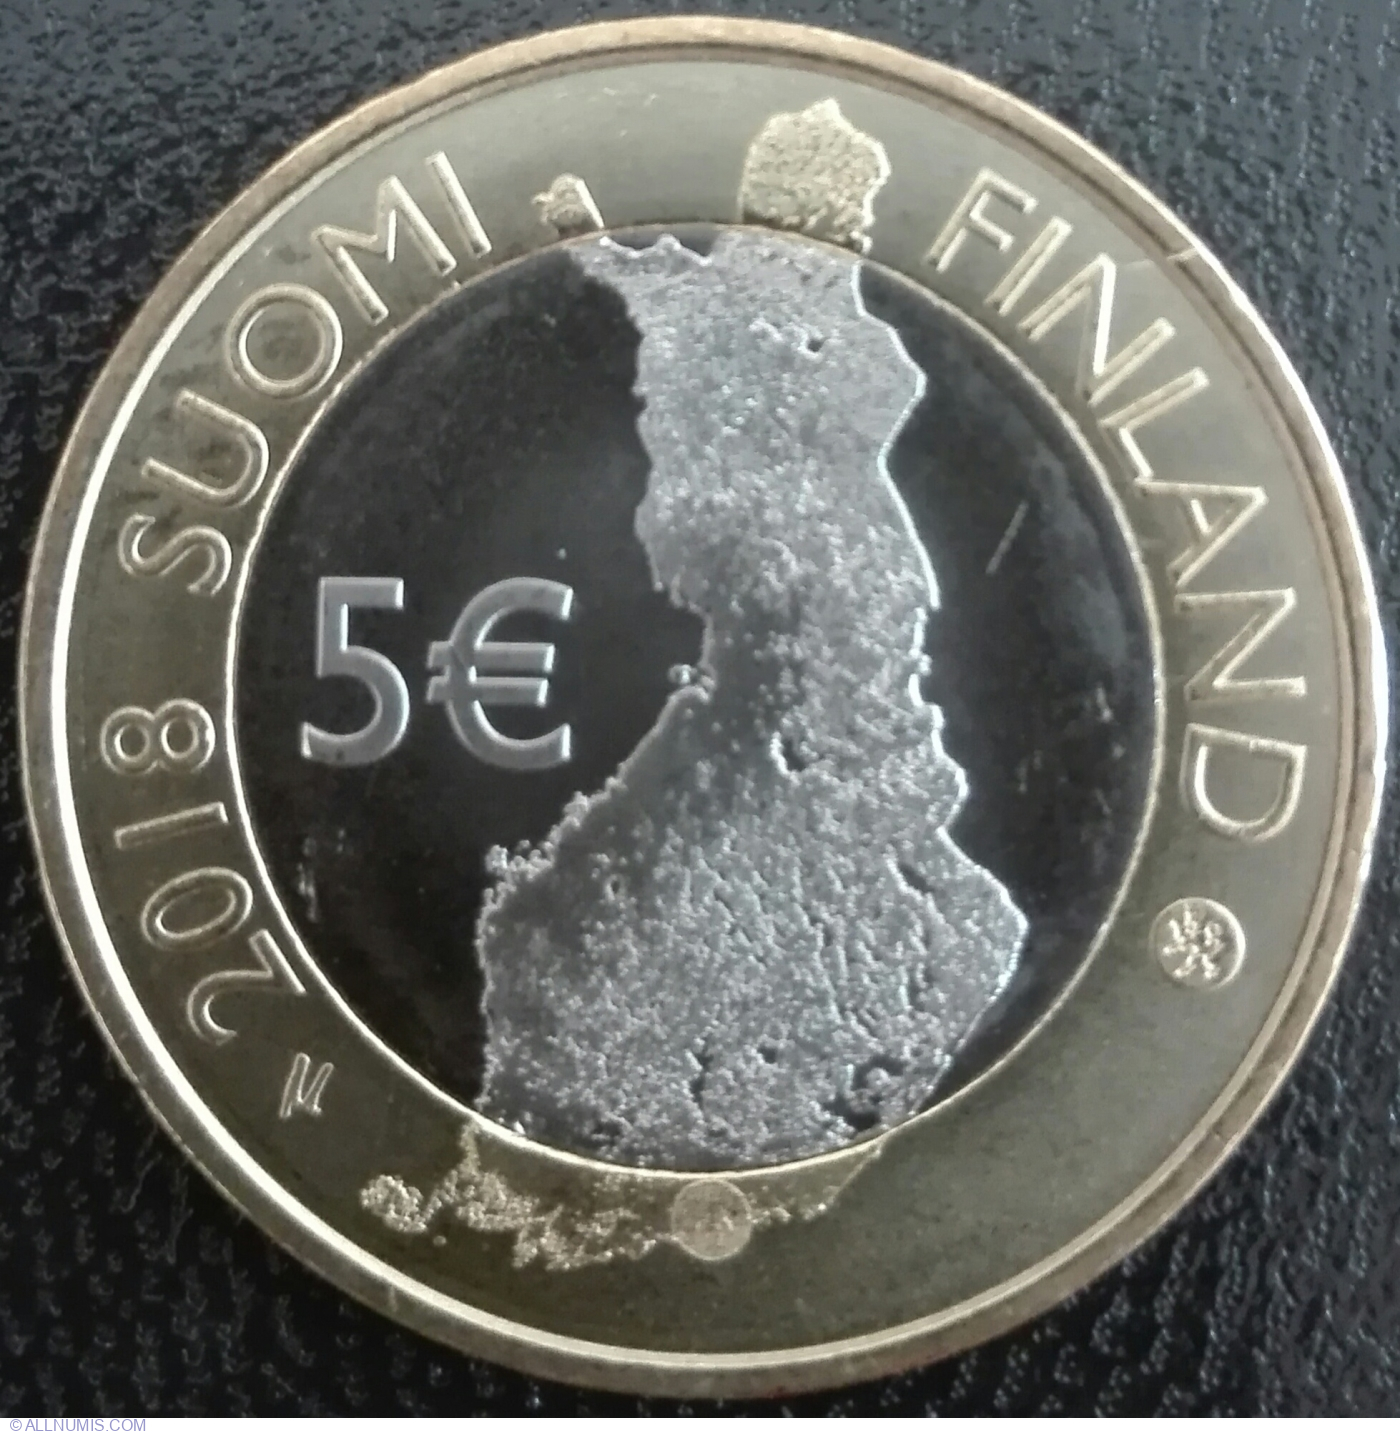 Finland 2 euro coin 2018 "Finnish Sauna culture" UNC 